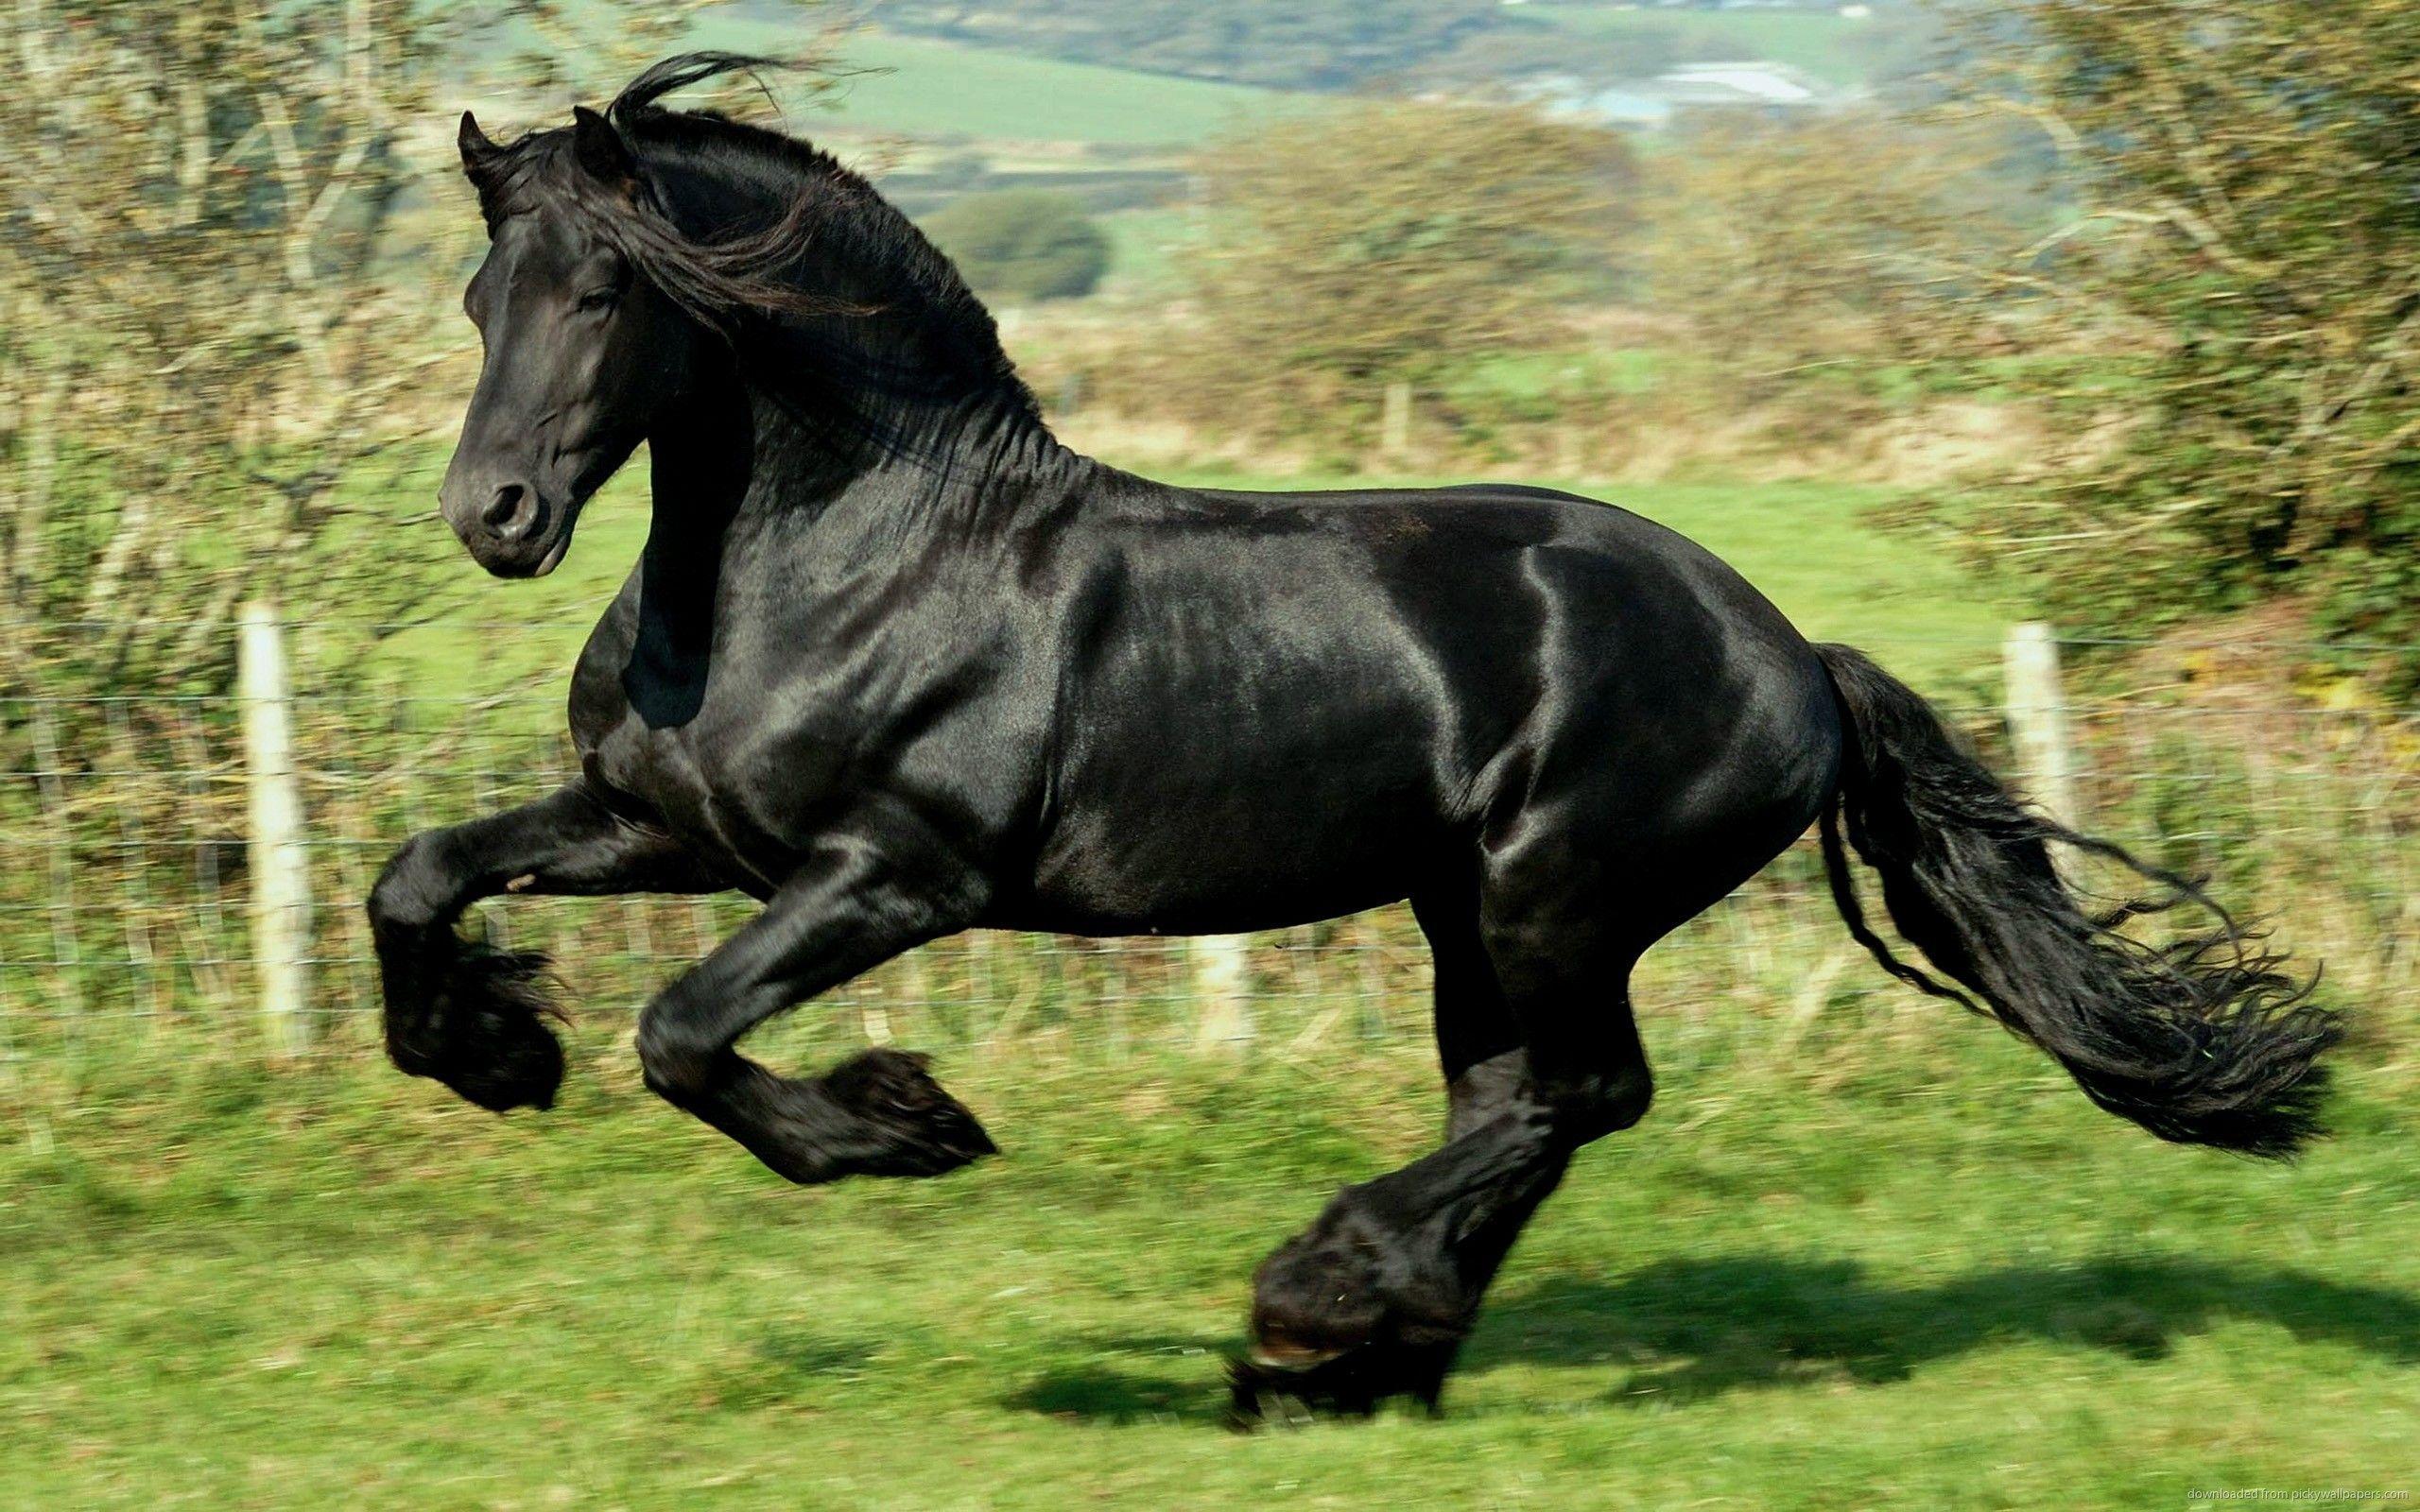 Black Stallion HD Wallpaper